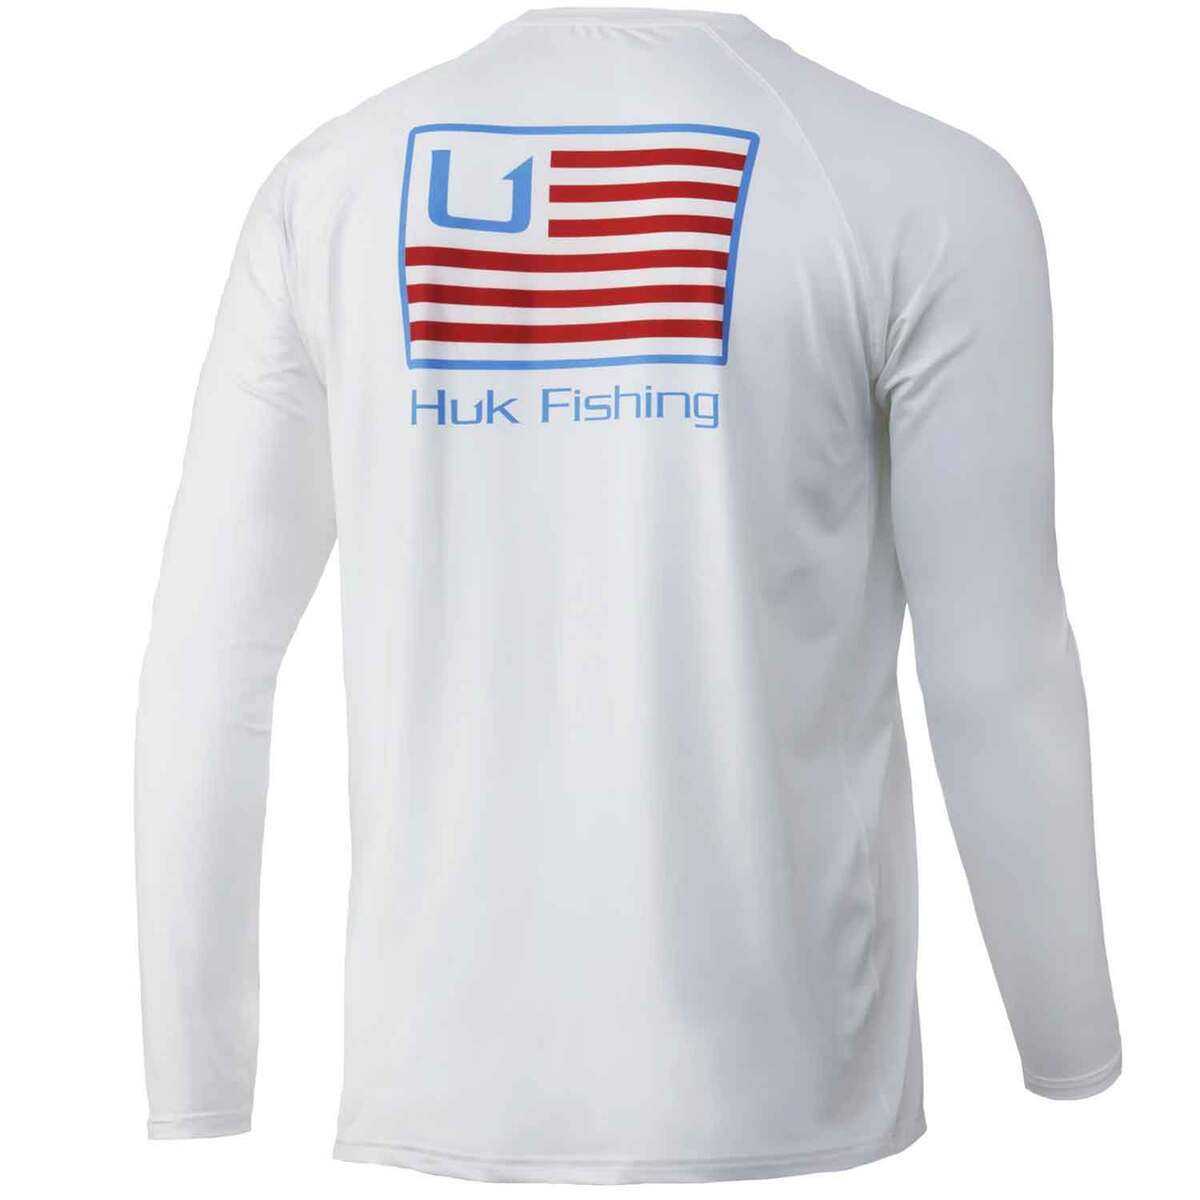 HUK Men's HUK Logo Shirt